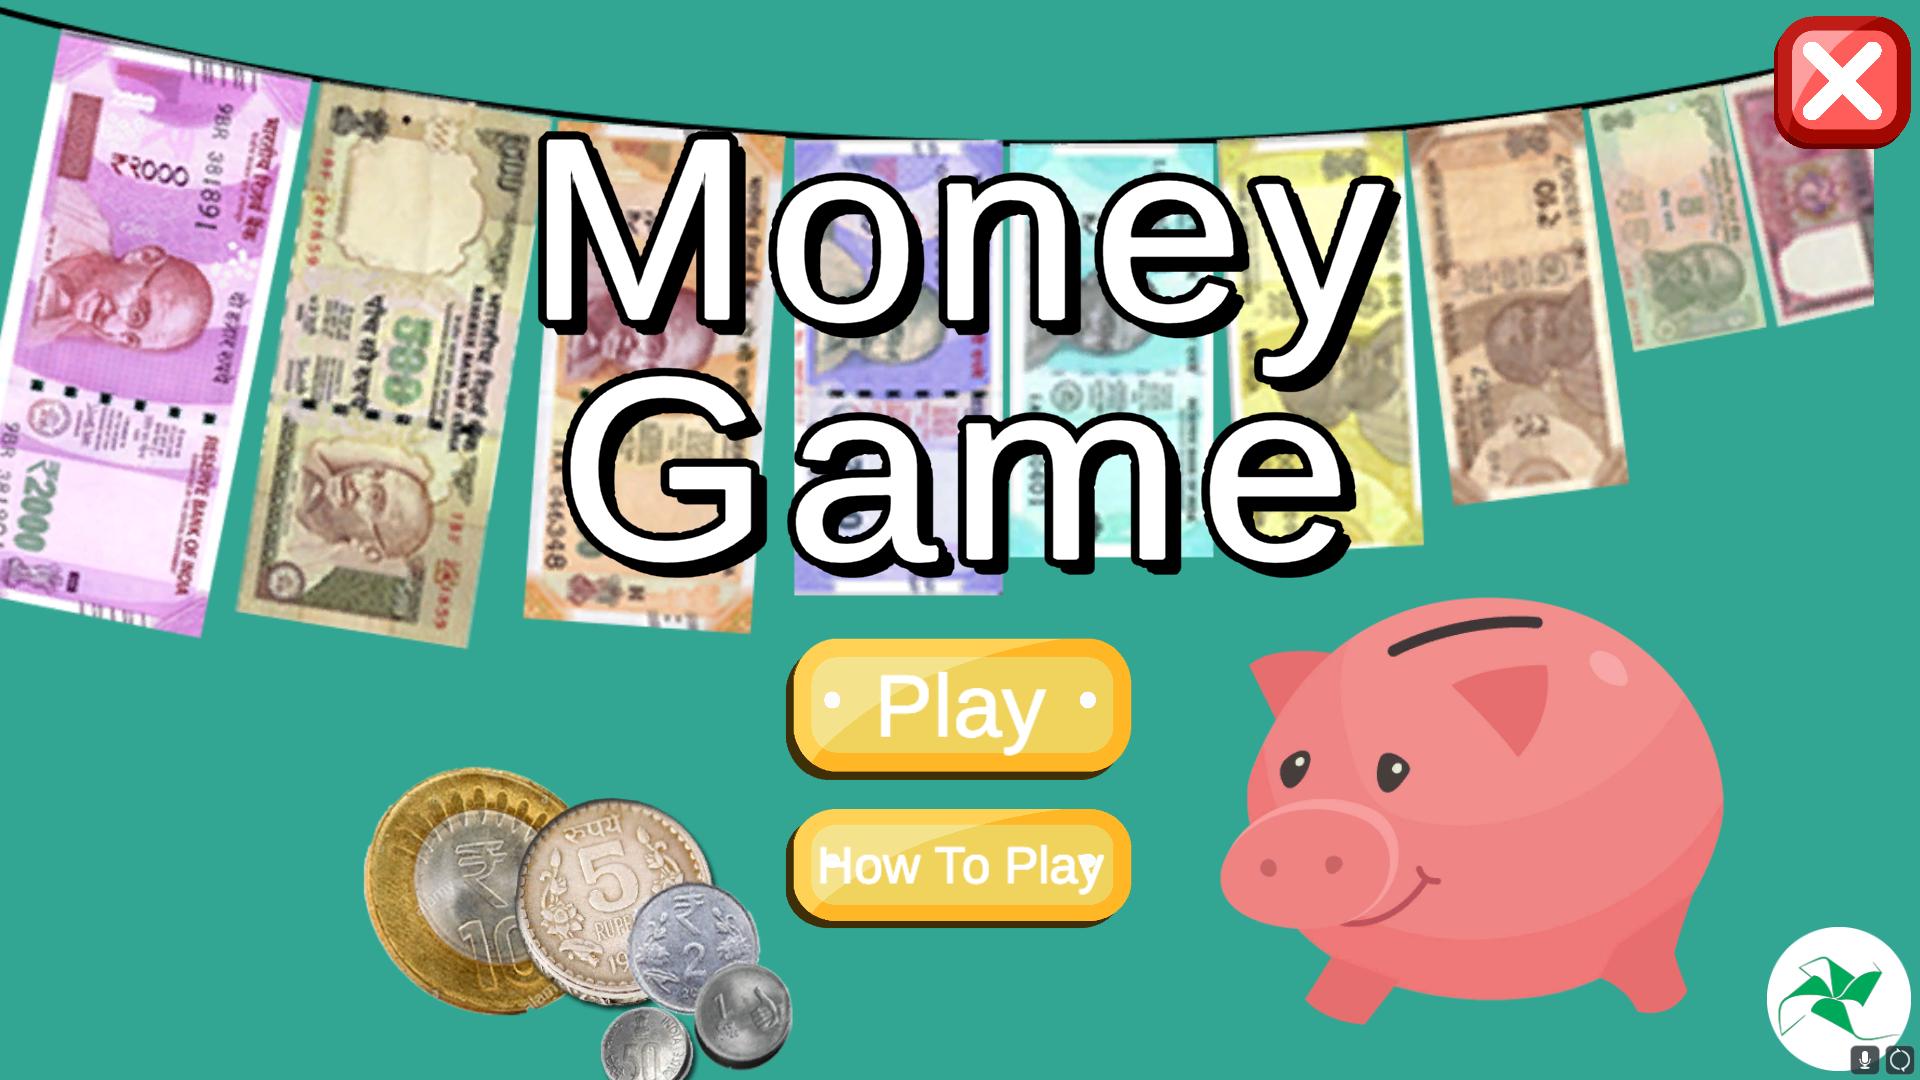 Game money. Money game 2. Get money game. No more money game. Money games me